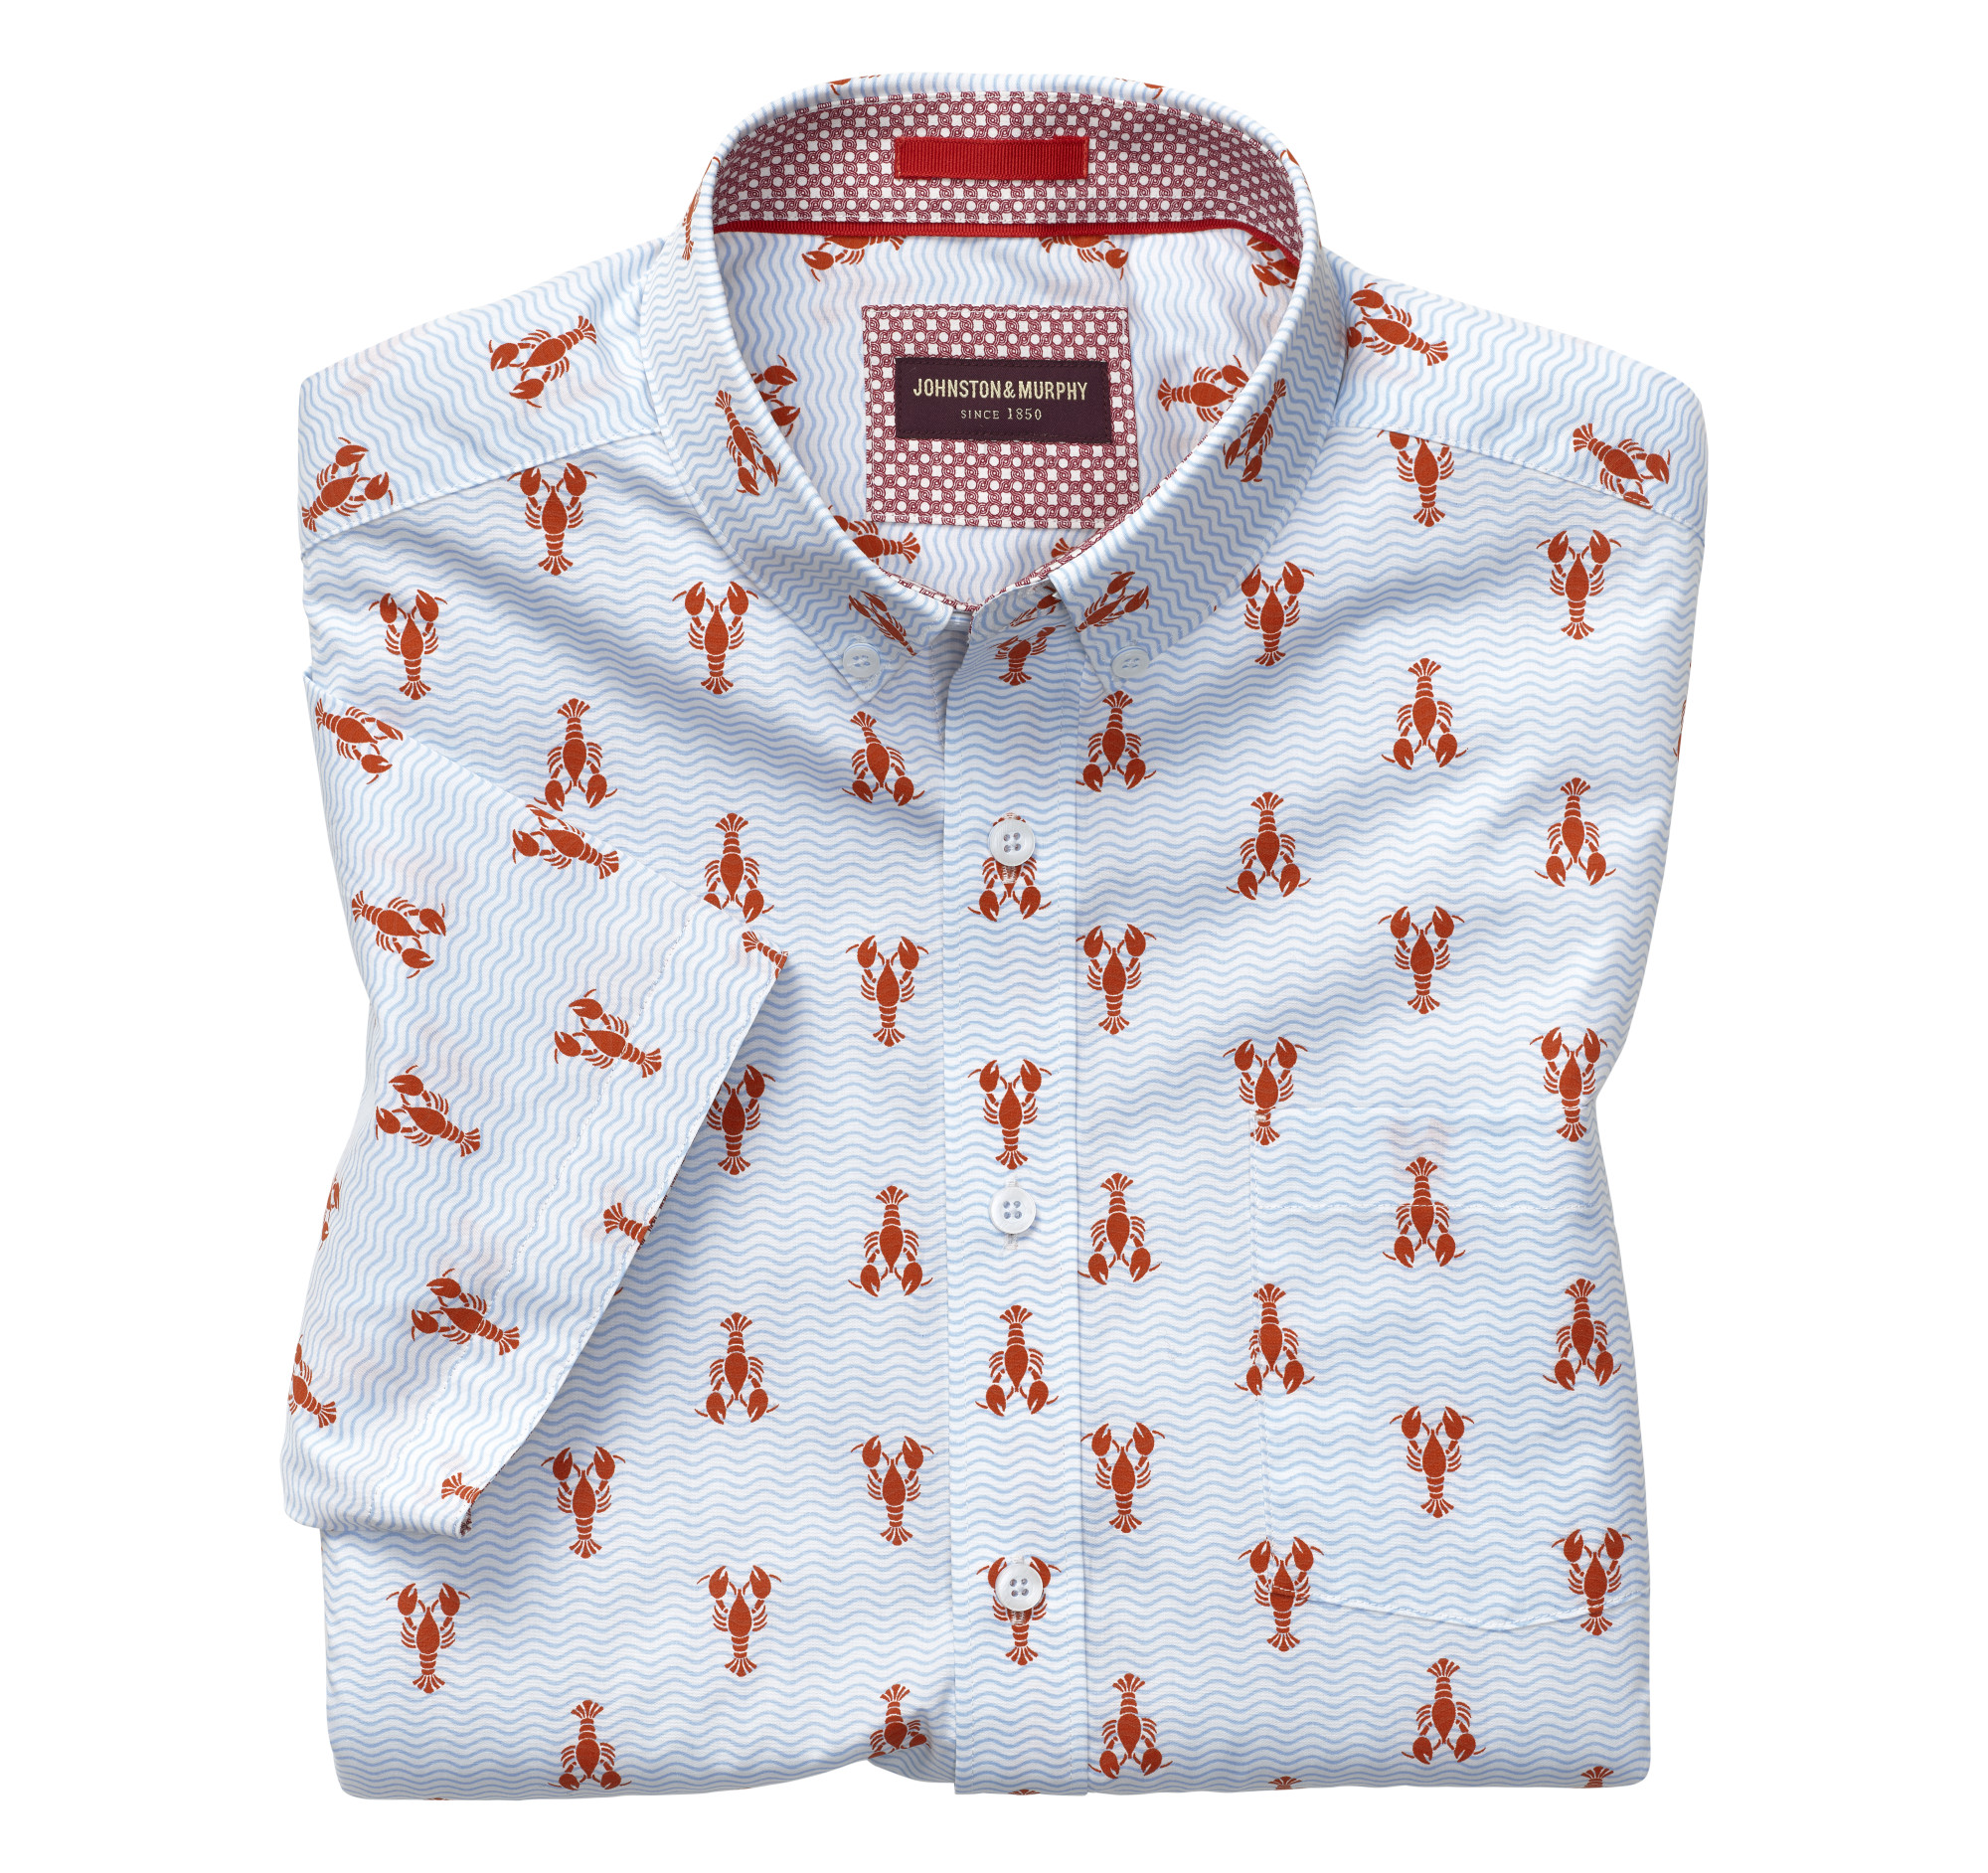 Lobster Print Short-Sleeve Shirt | Johnston & Murphy